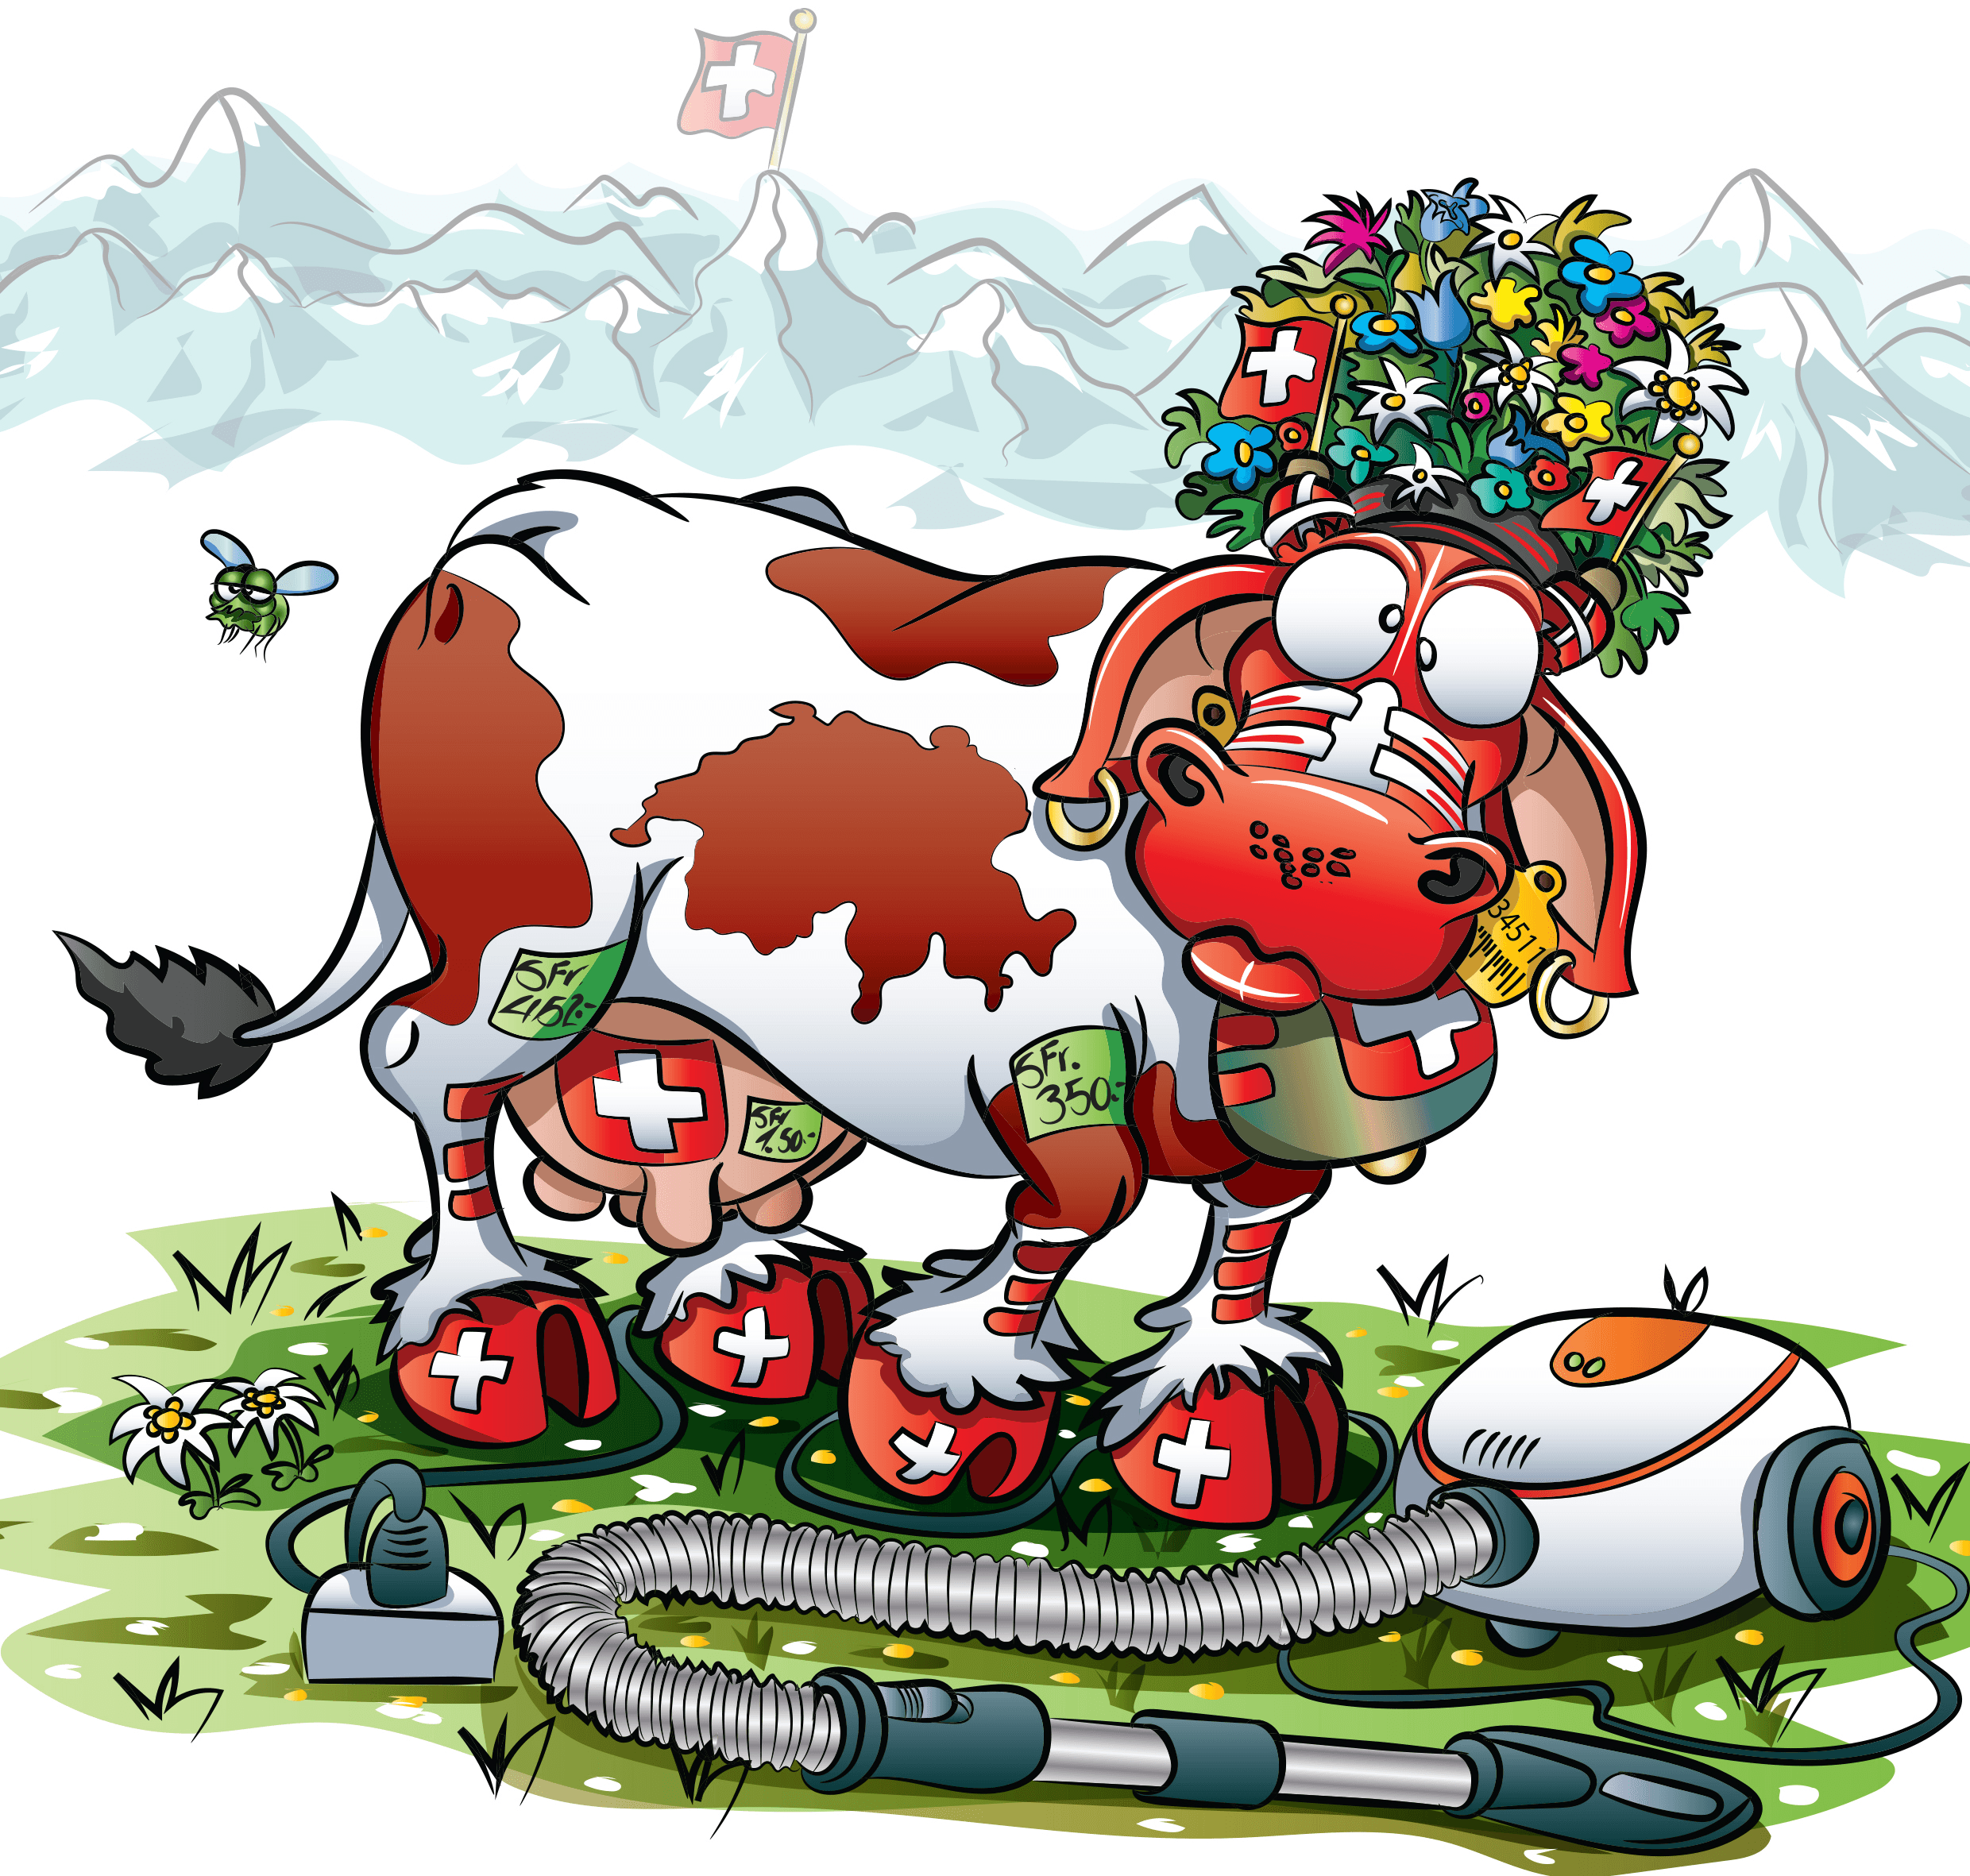 Cow series No. 3 Swissness